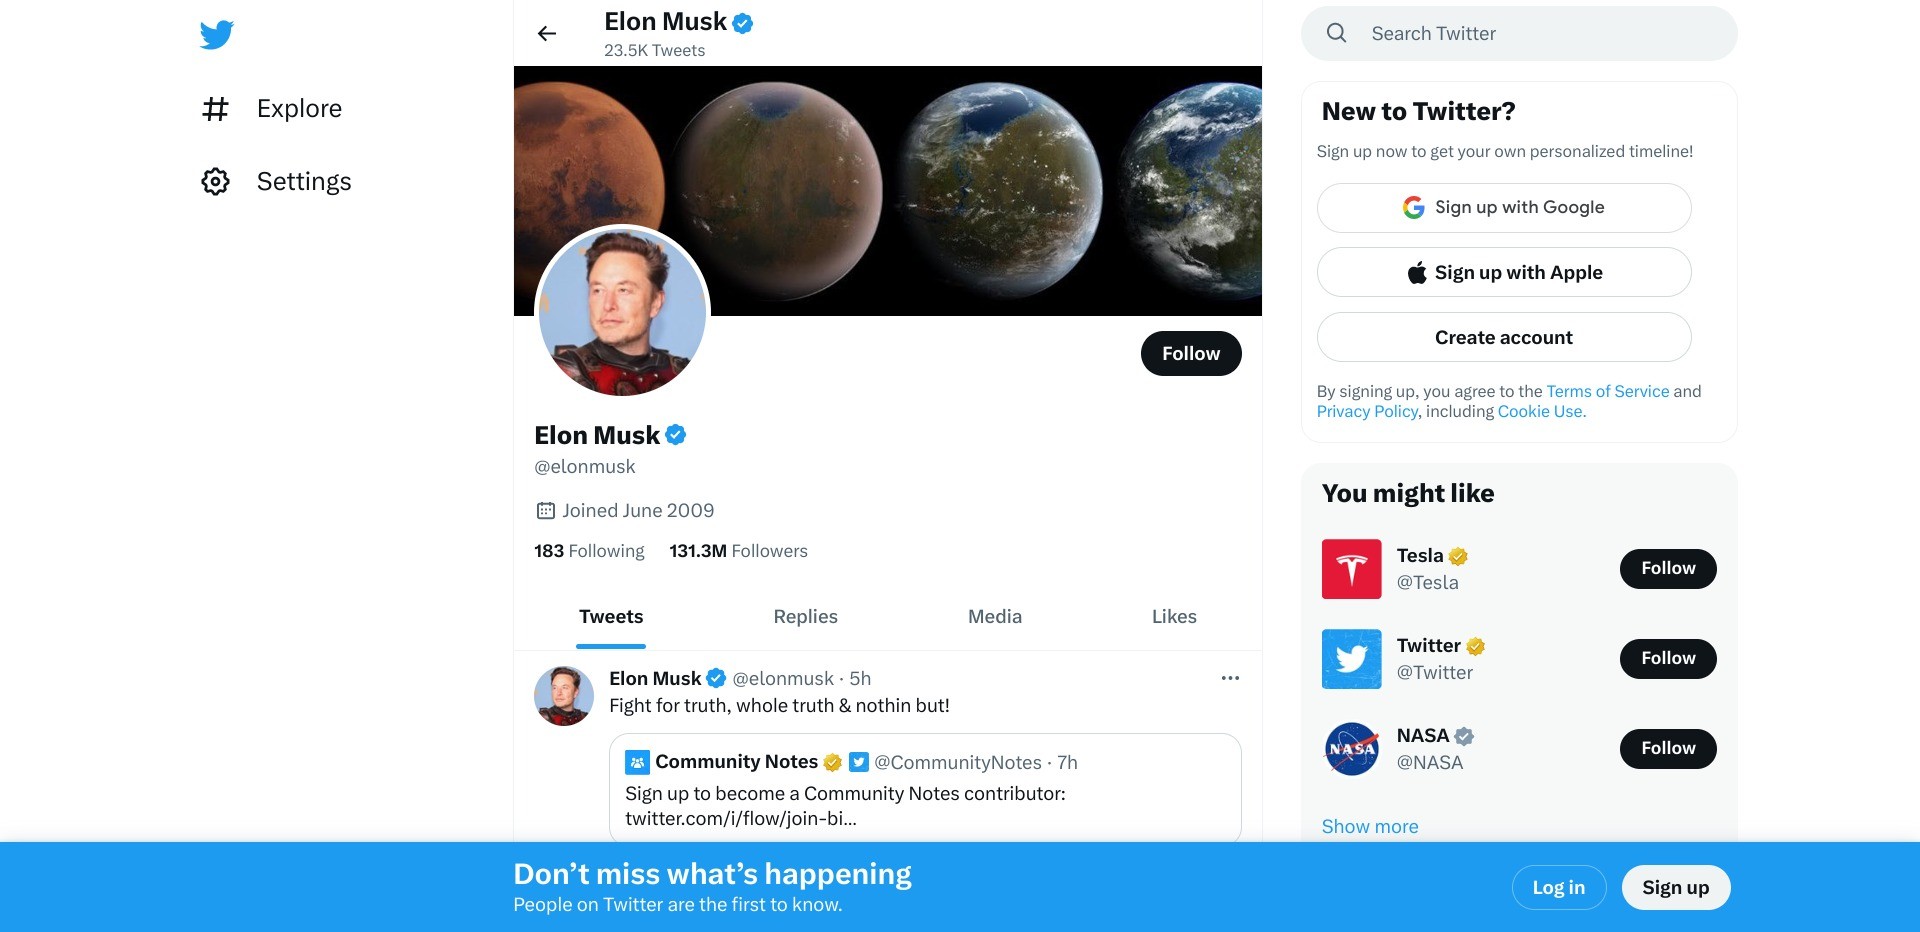 Screenshot of twitter.com/elonmusk, displaying Elon Musk’s Twitter account with a blue tick